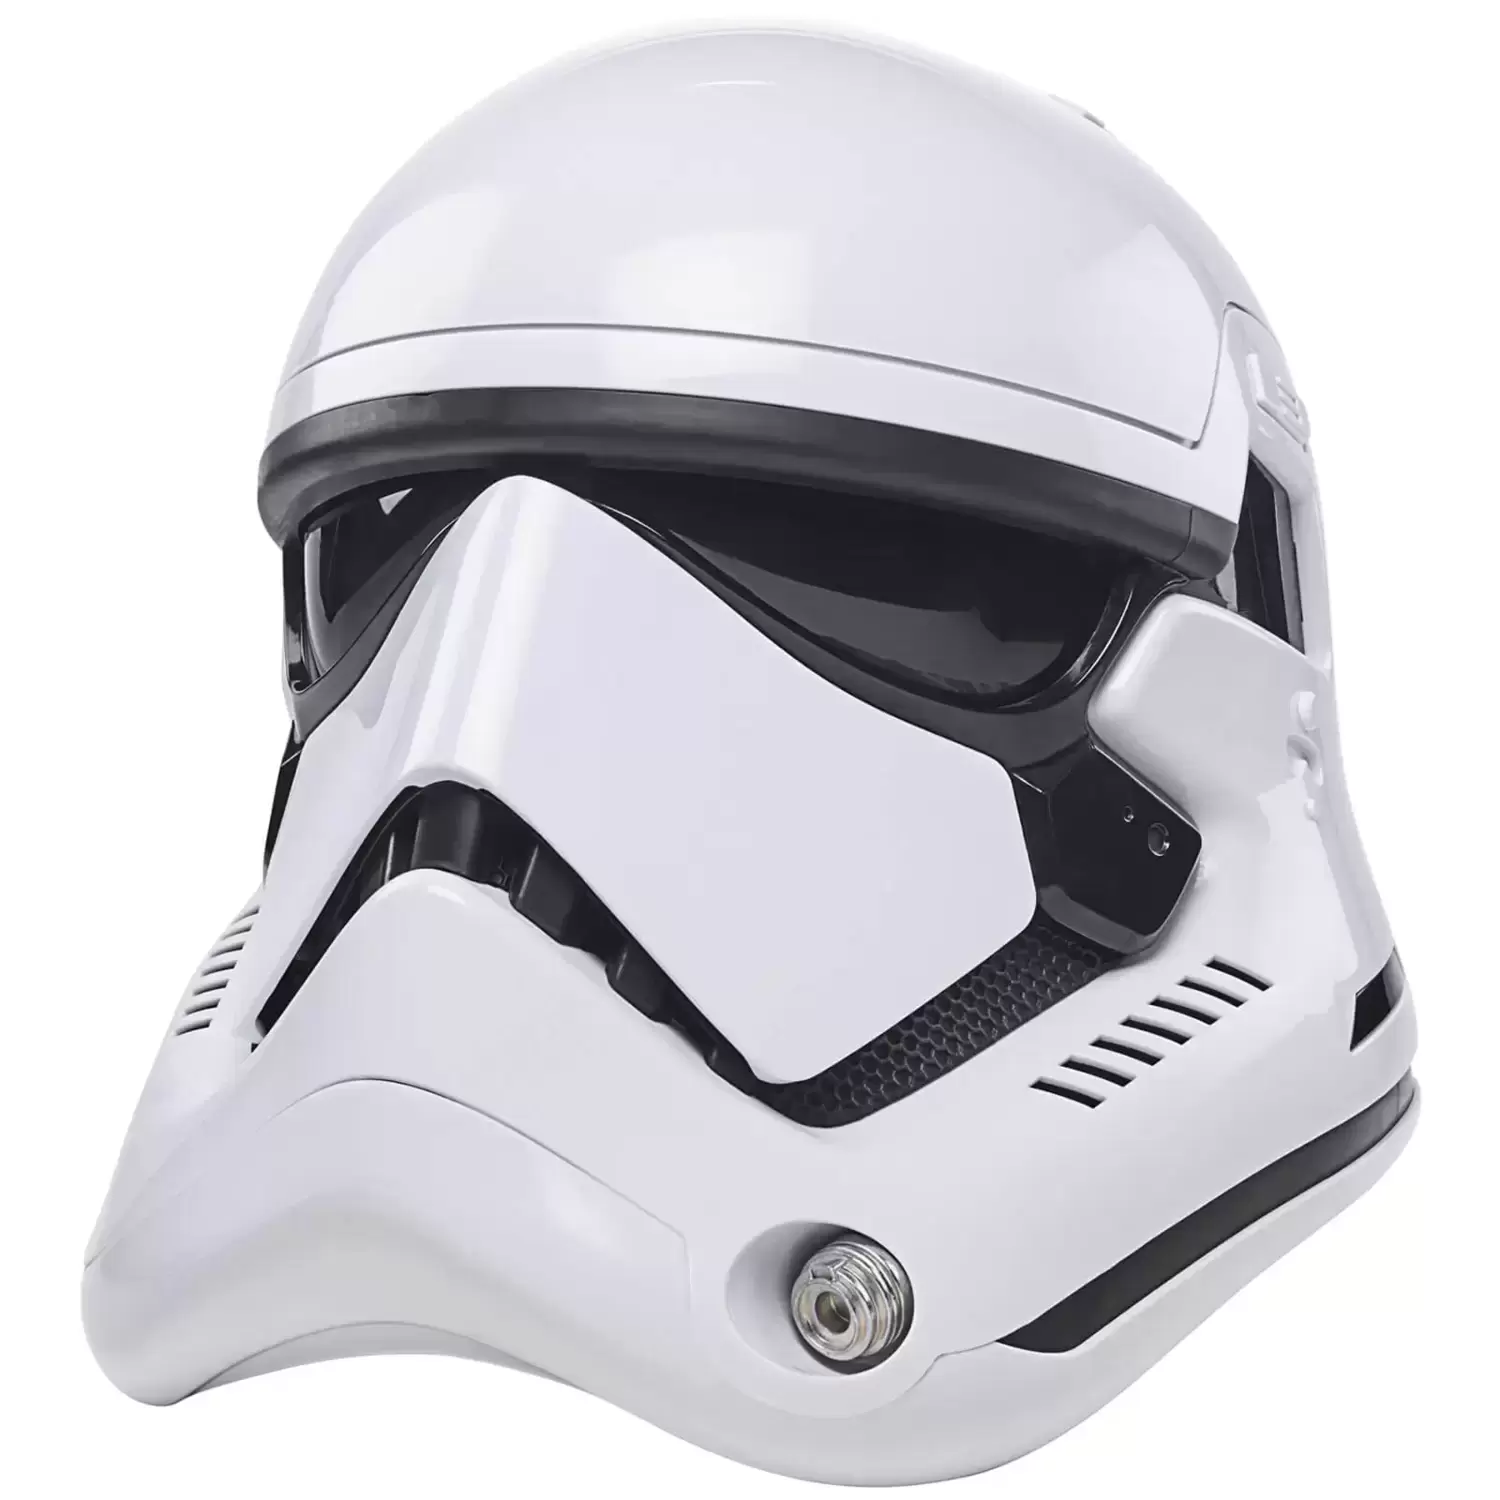 Repliques Black Series - First Order Stormtrooper Electronic Helmet